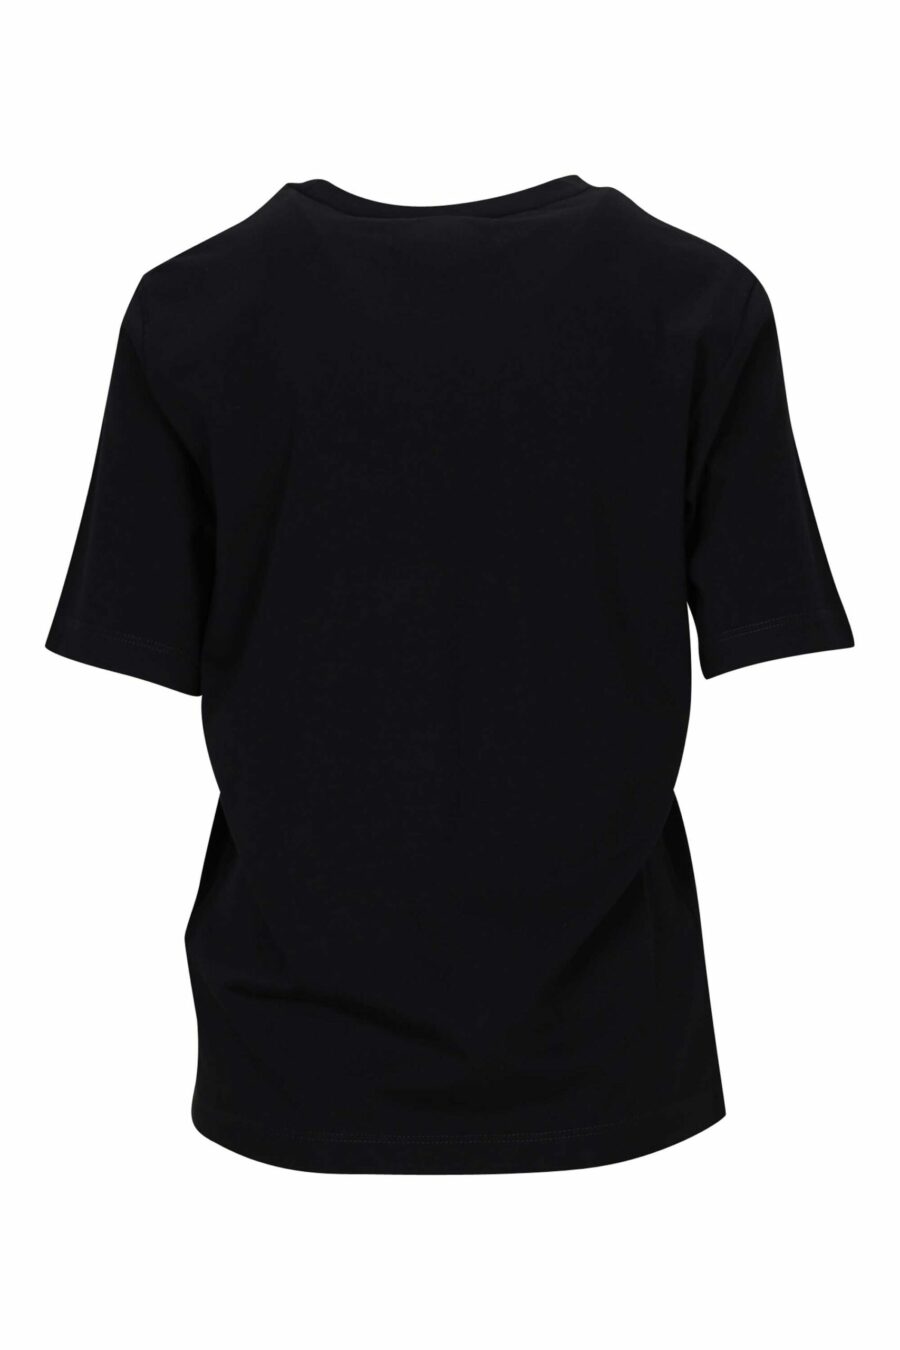 Black T-shirt with fuchsia neon blurred logo - 8054148406530 1 scaled